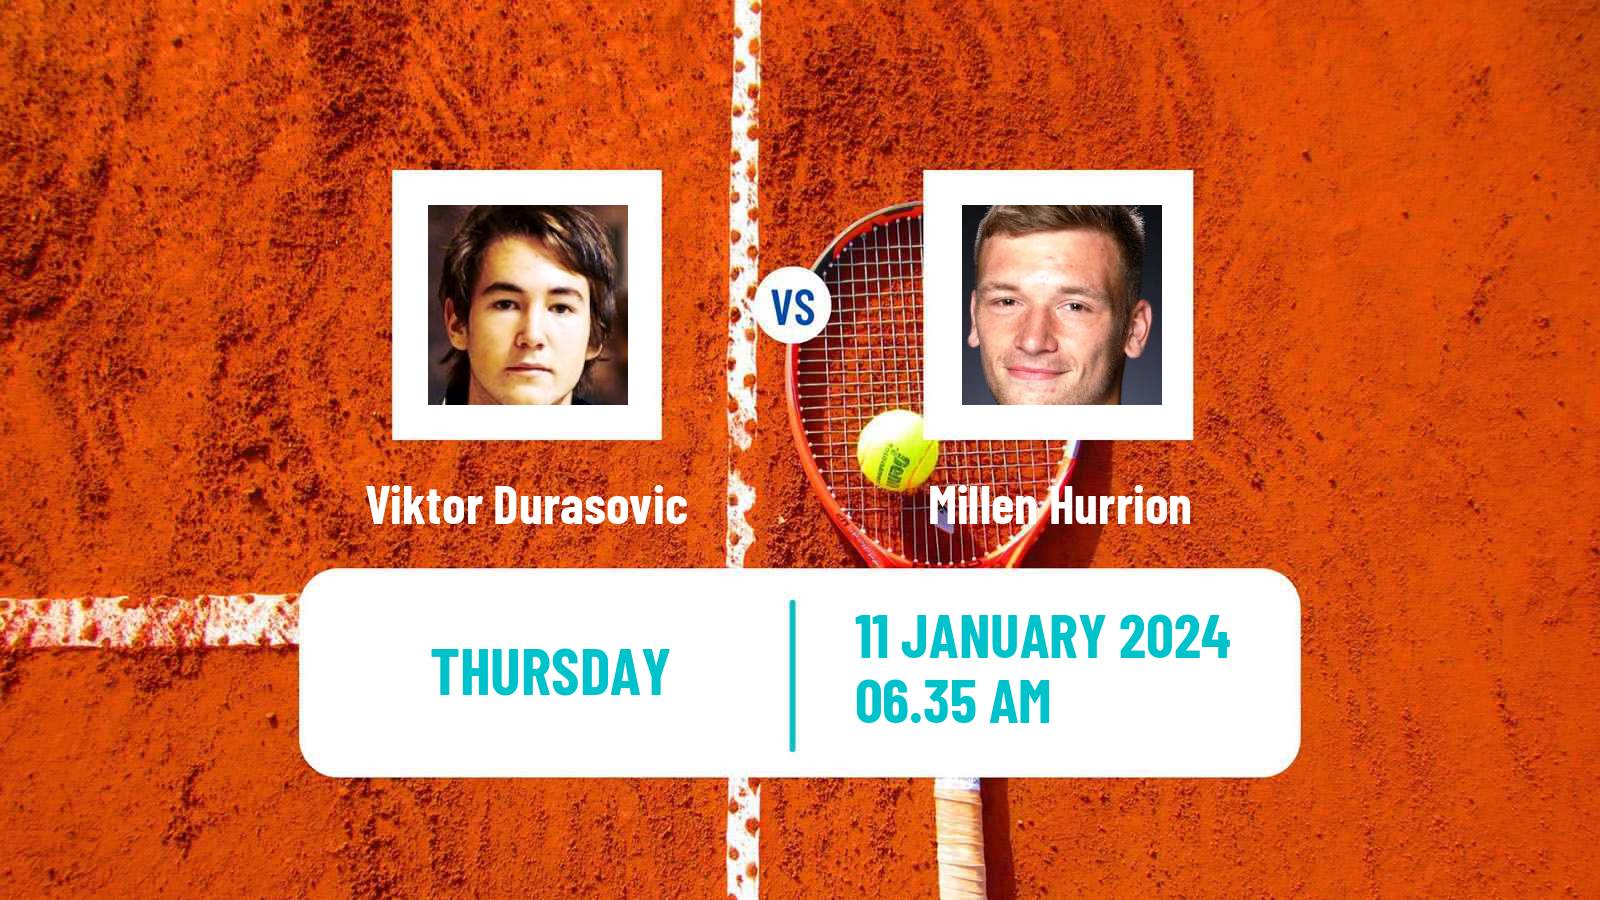 Tennis ITF M25 Loughborough Men Viktor Durasovic - Millen Hurrion